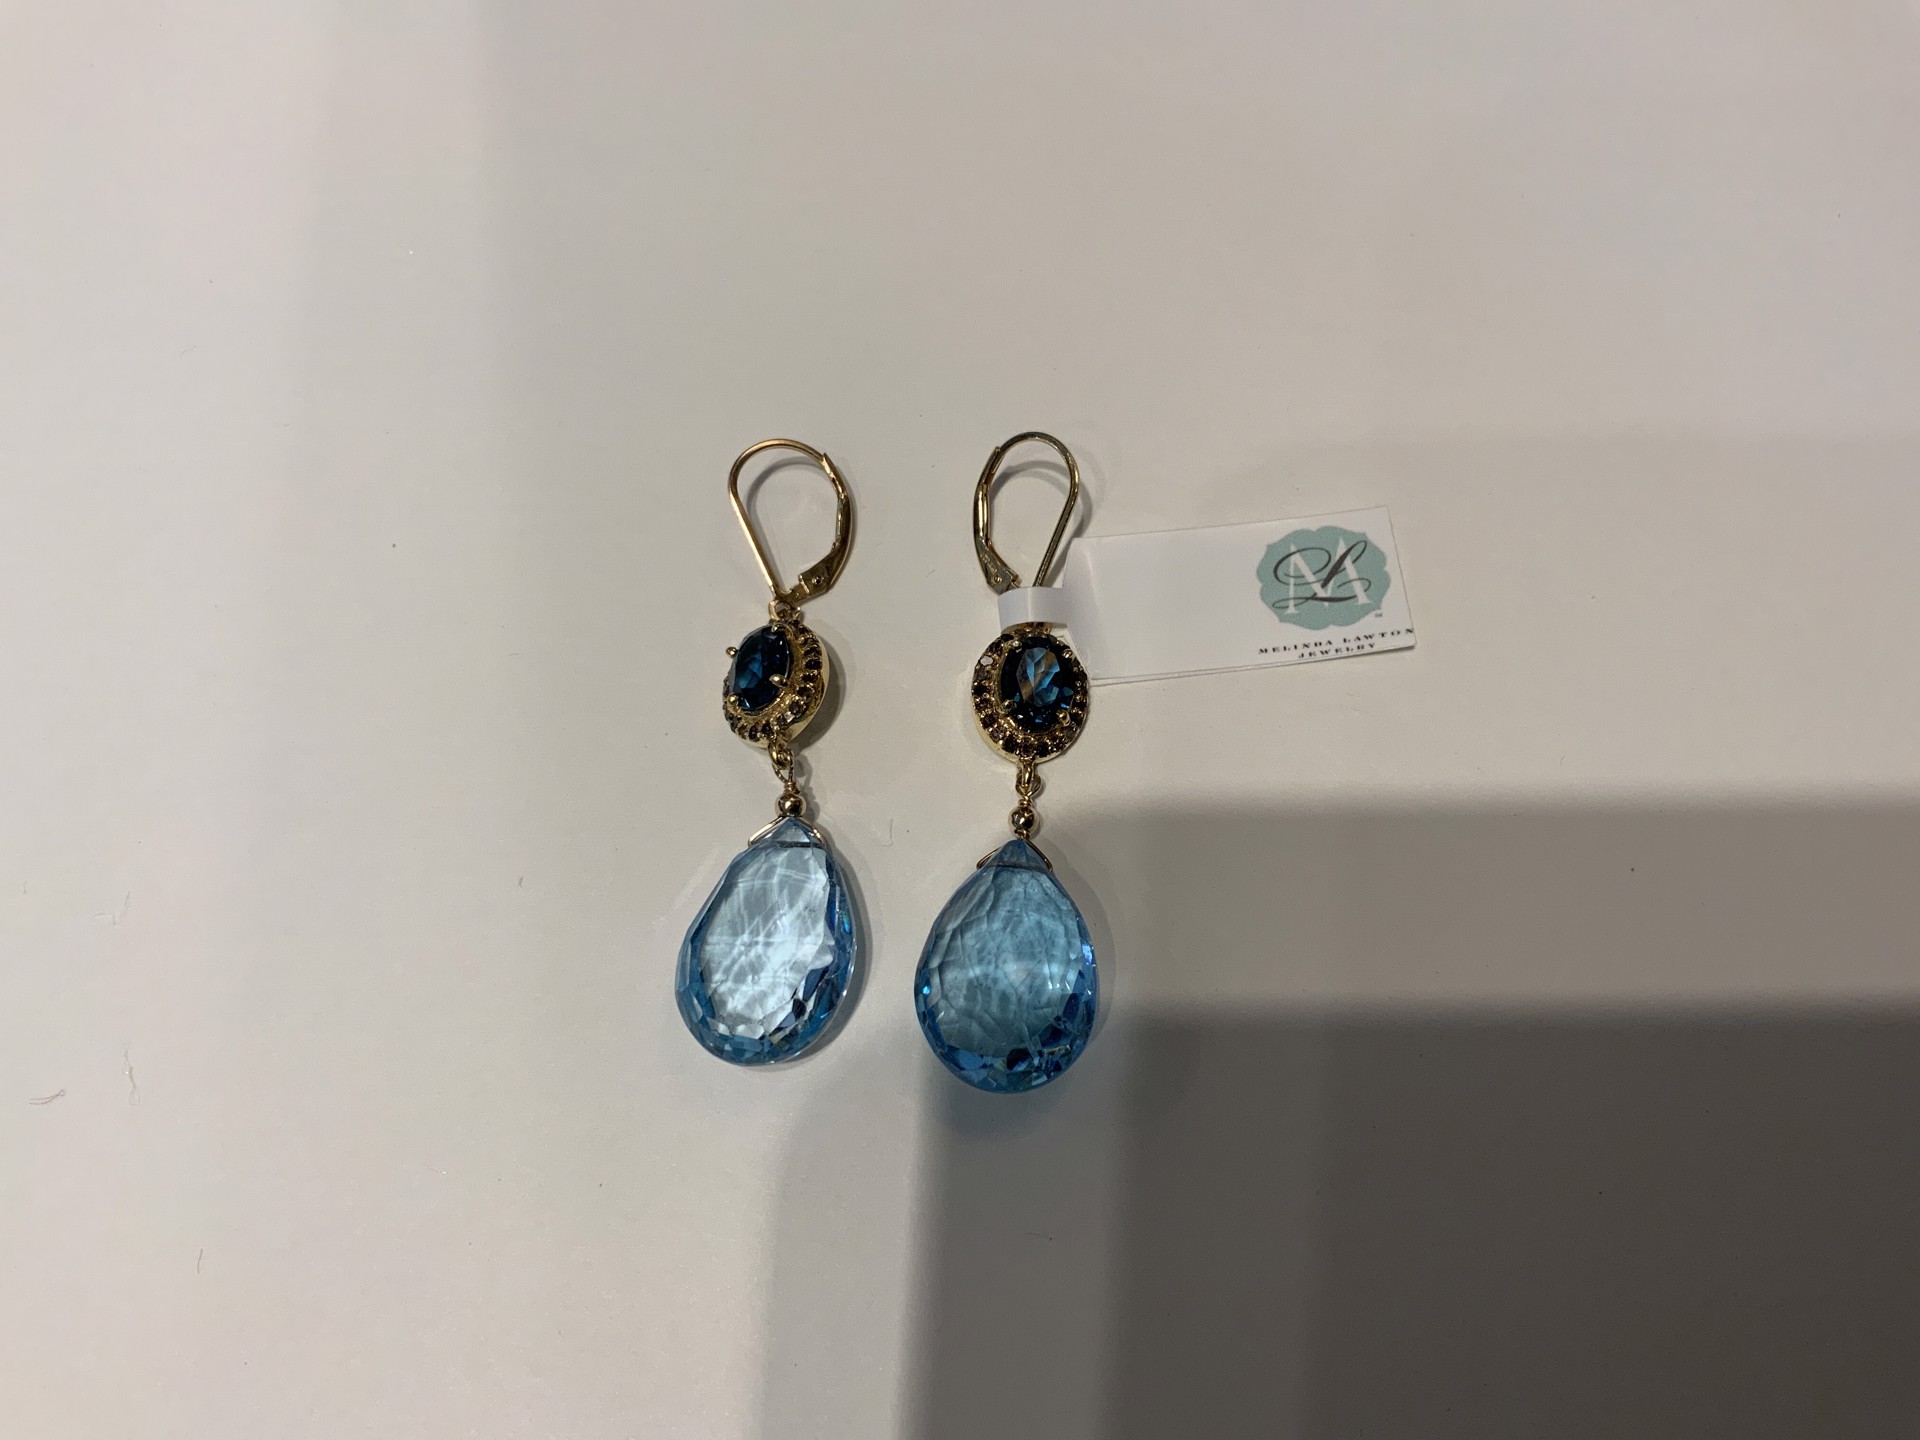 Swiss and London Blue Topaz with Pave Diamonds by Melinda Lawton Jewelry